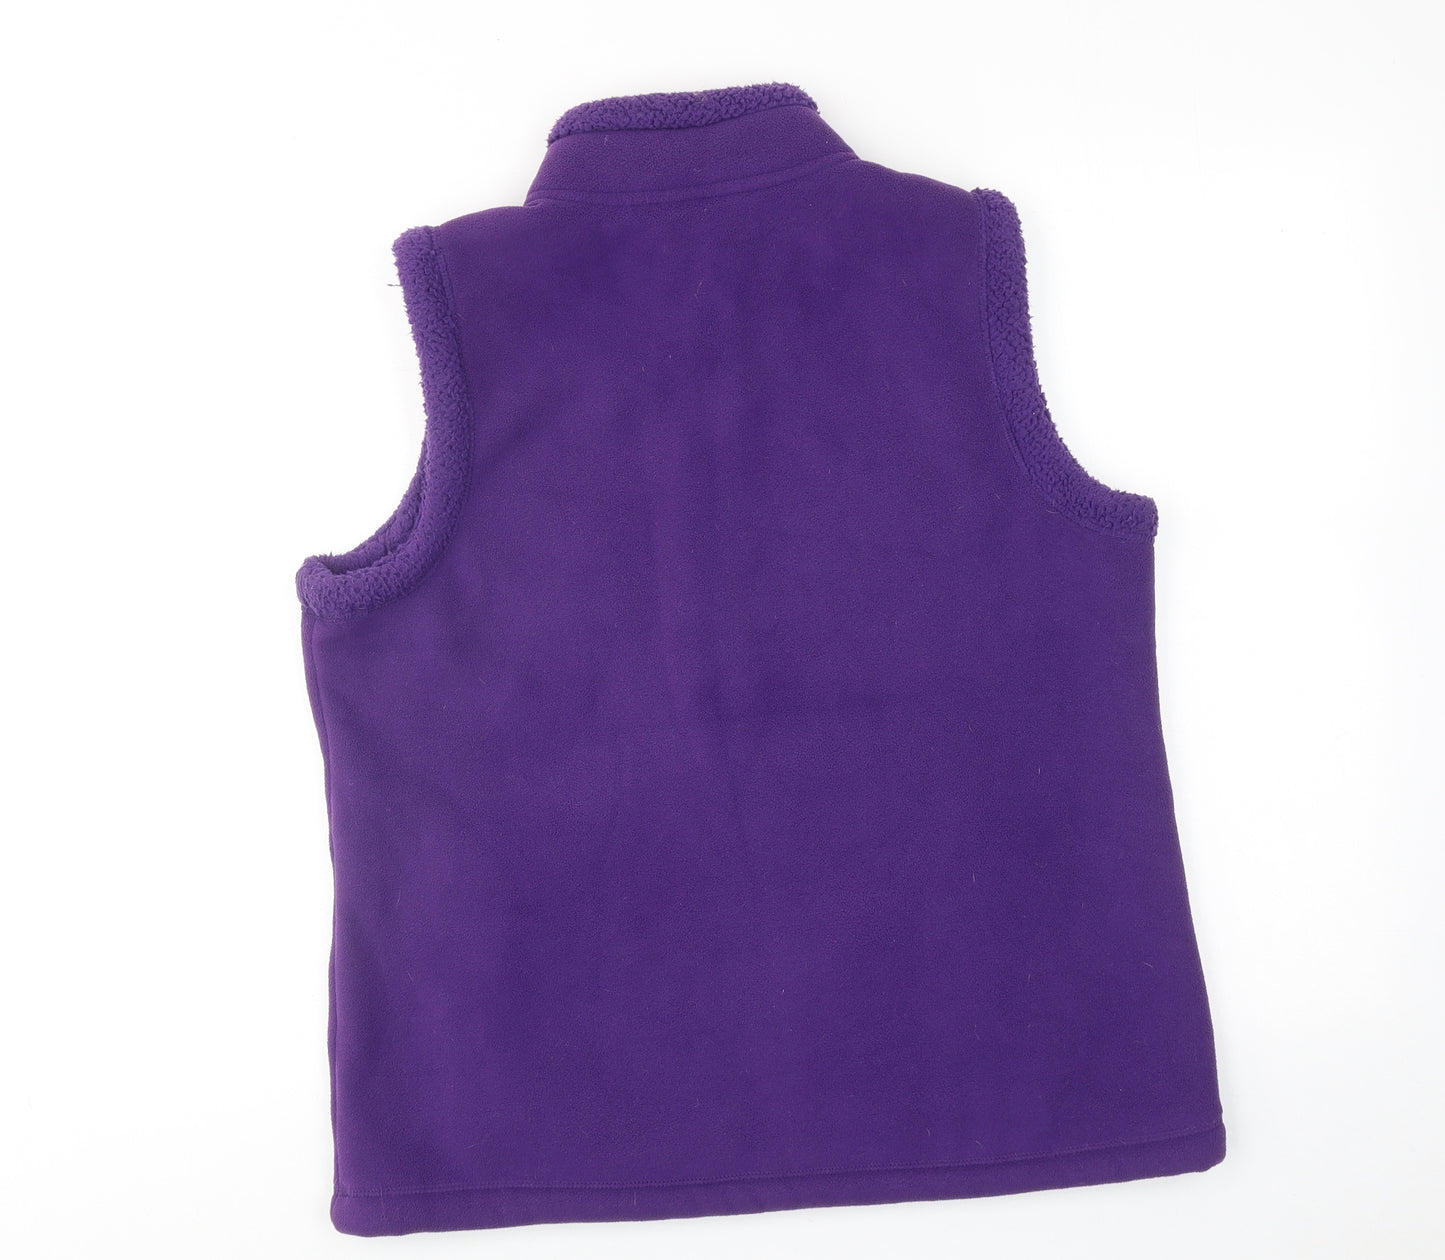 Bonmarché Womens Purple Gilet Jacket Size M Zip